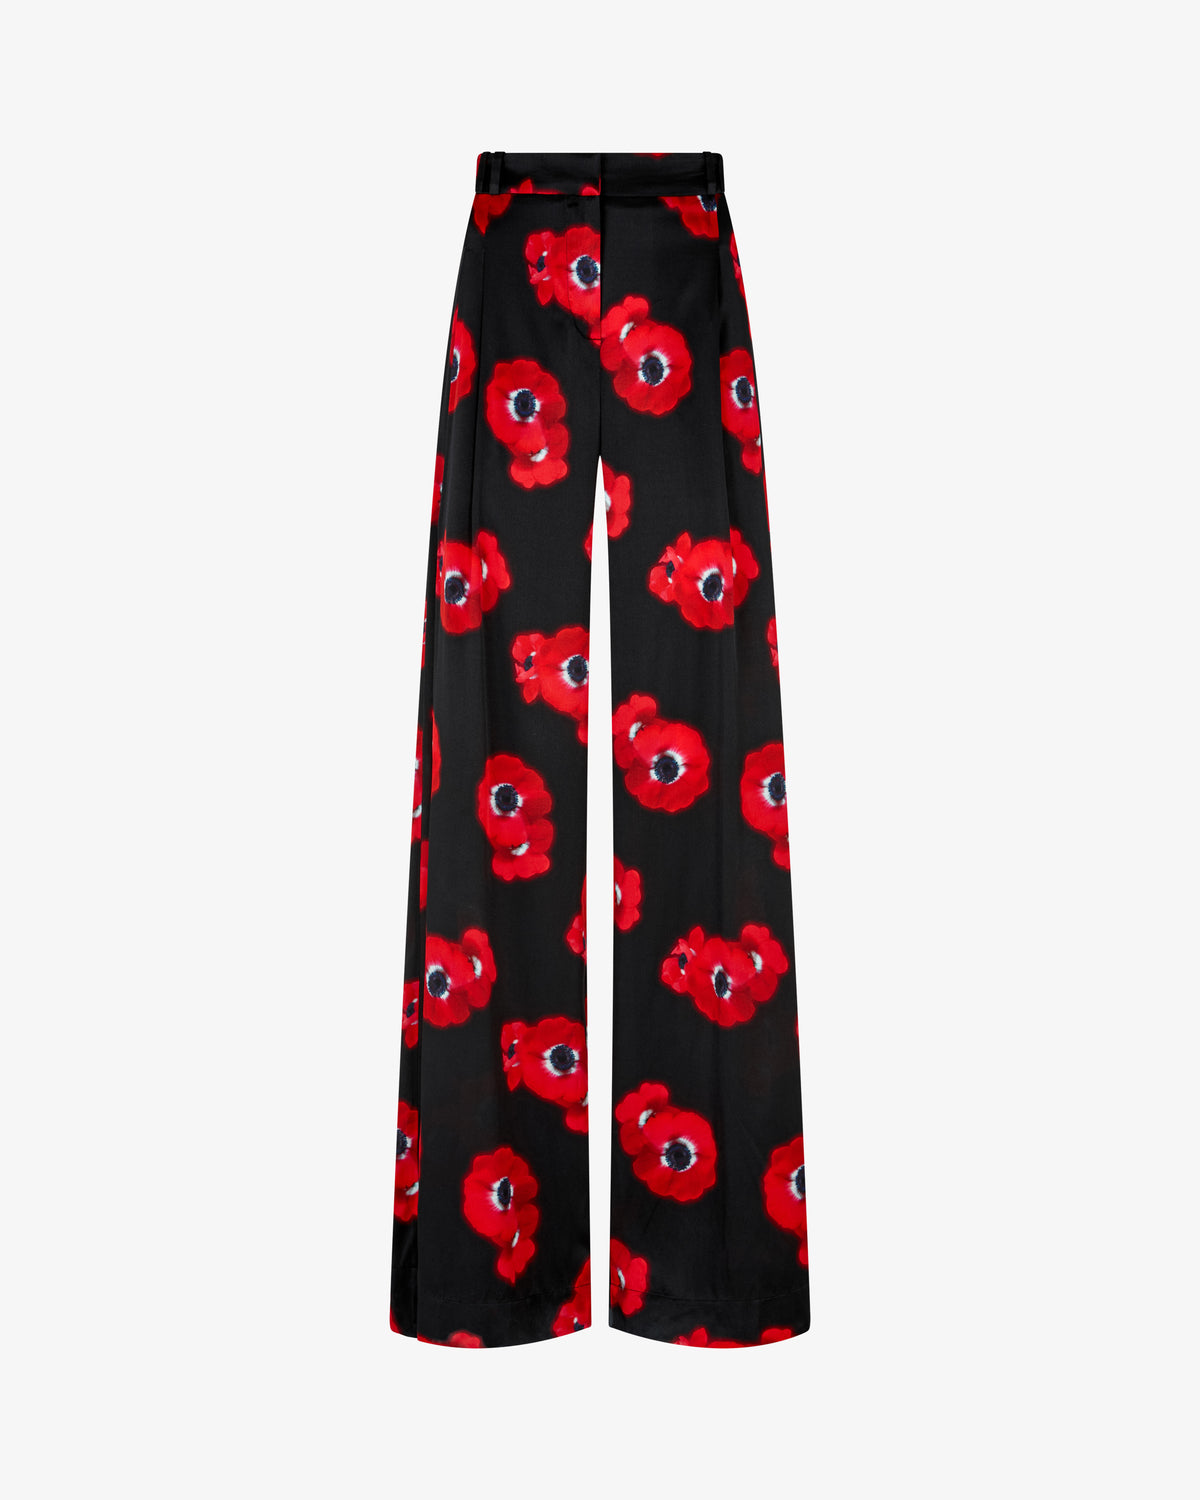 Graphic Poppy Serena Wide Leg Trouser - Black/Red